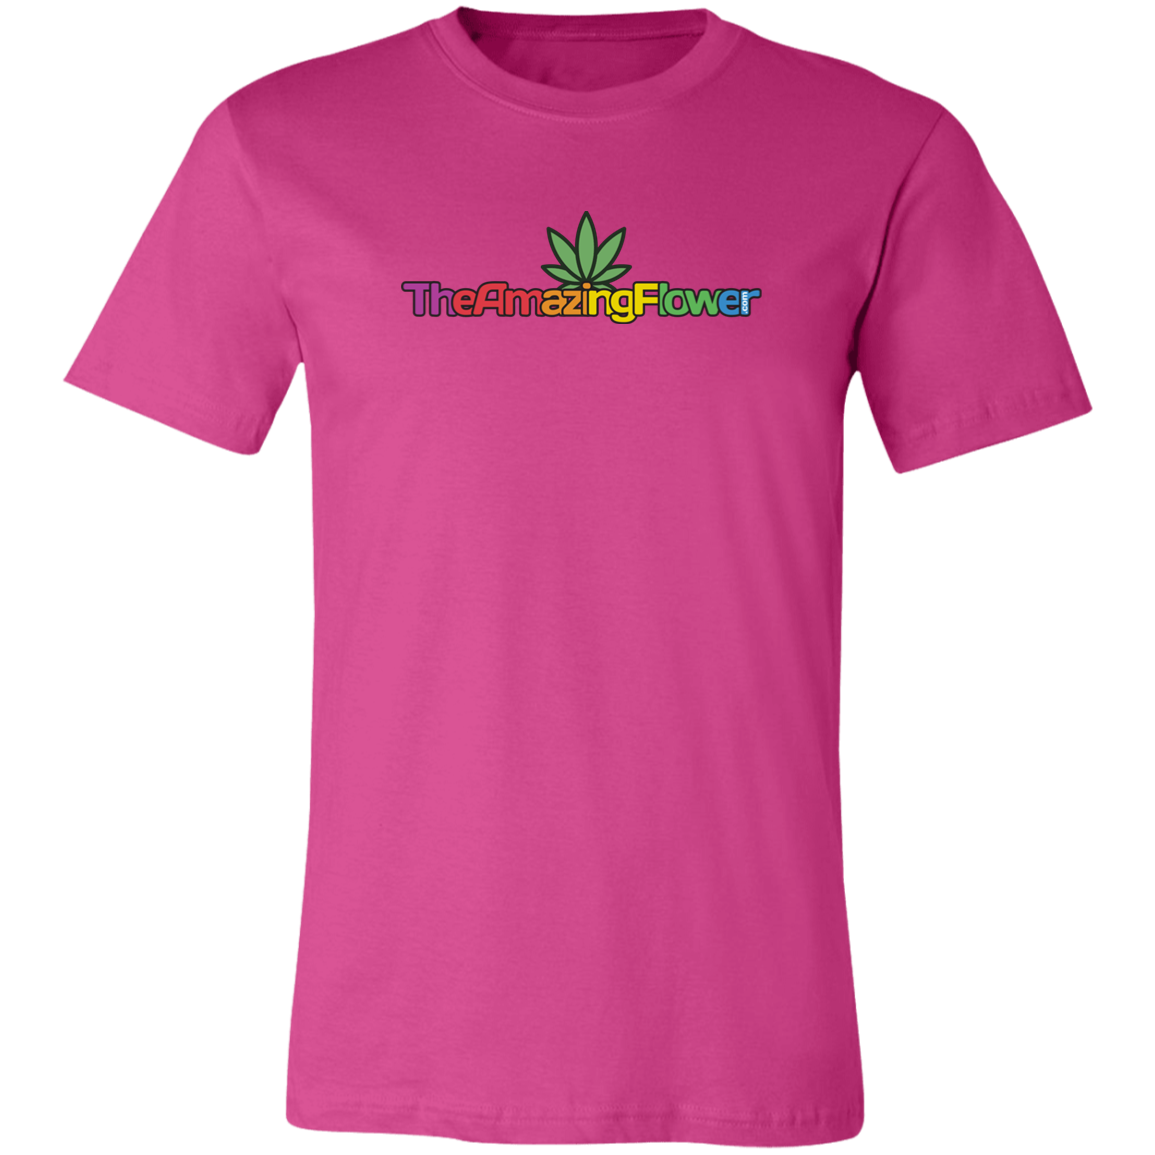 Hemp Leaf Logo T-Shirt from TheAmazingFlower.com (Berry Pink)